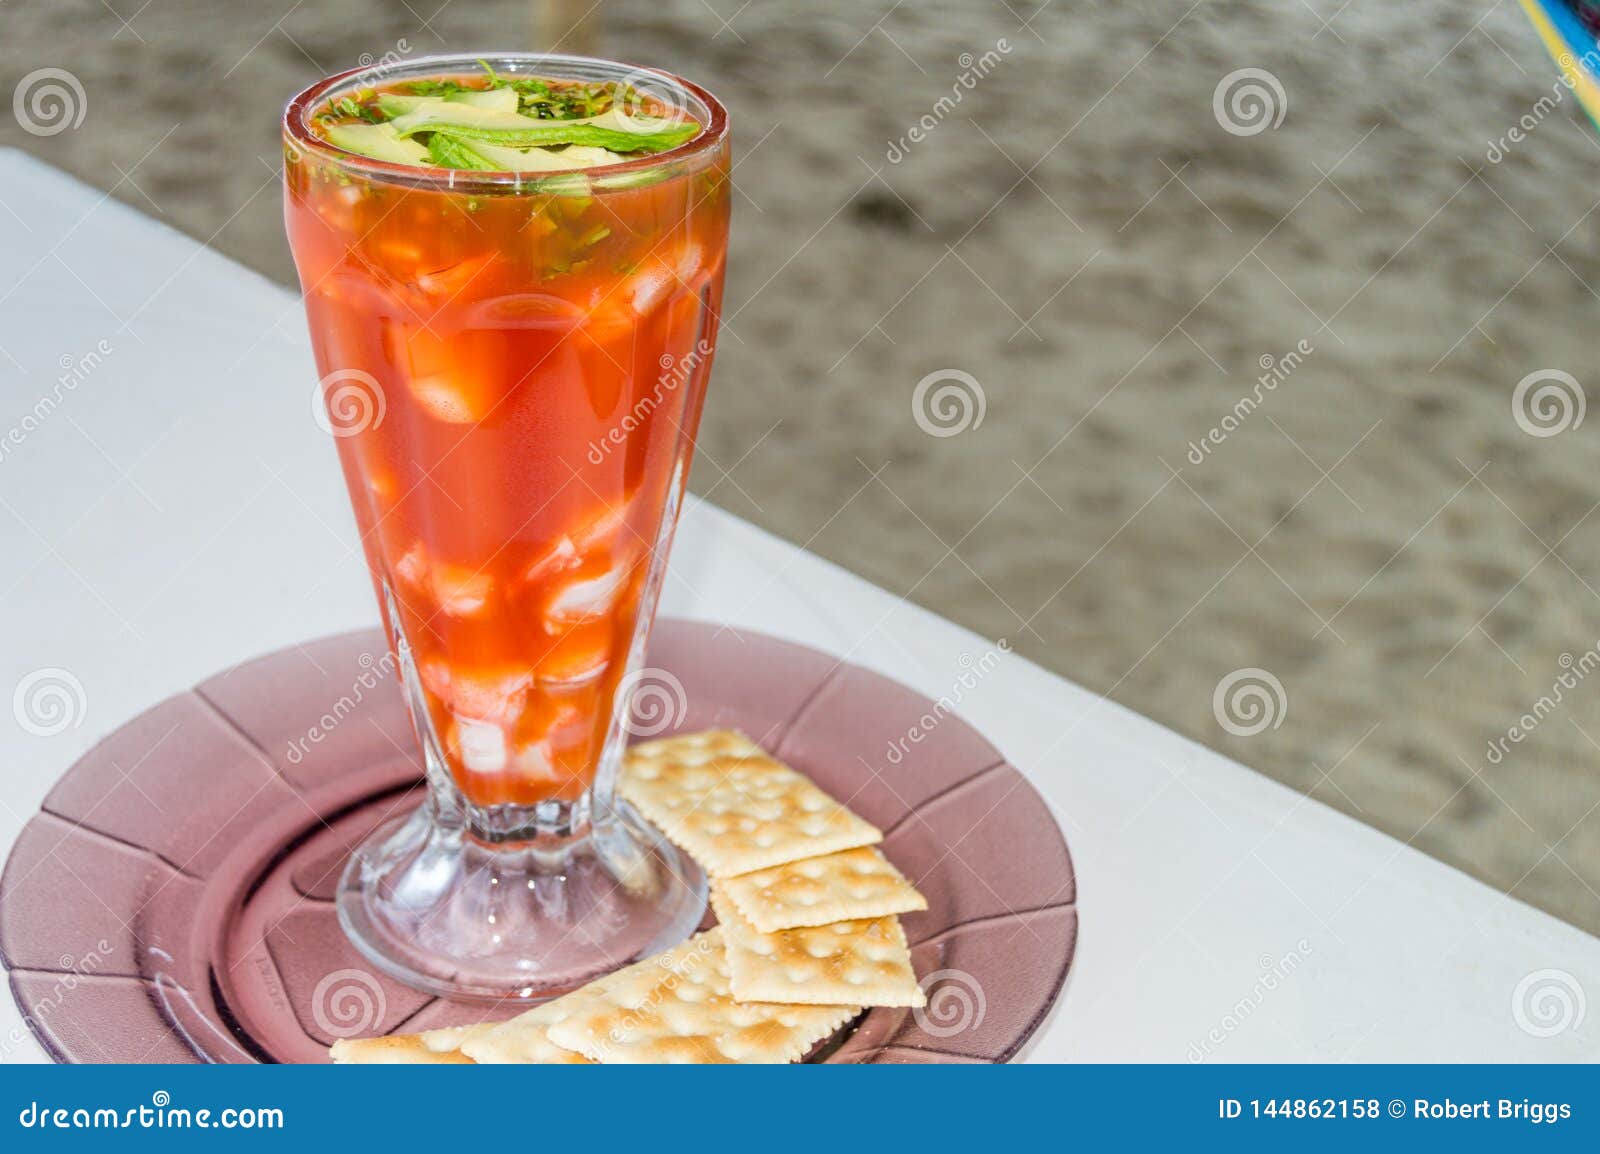 coctel de camaron, prawn cocktail, at the beach in veracruz, mexico. copy space